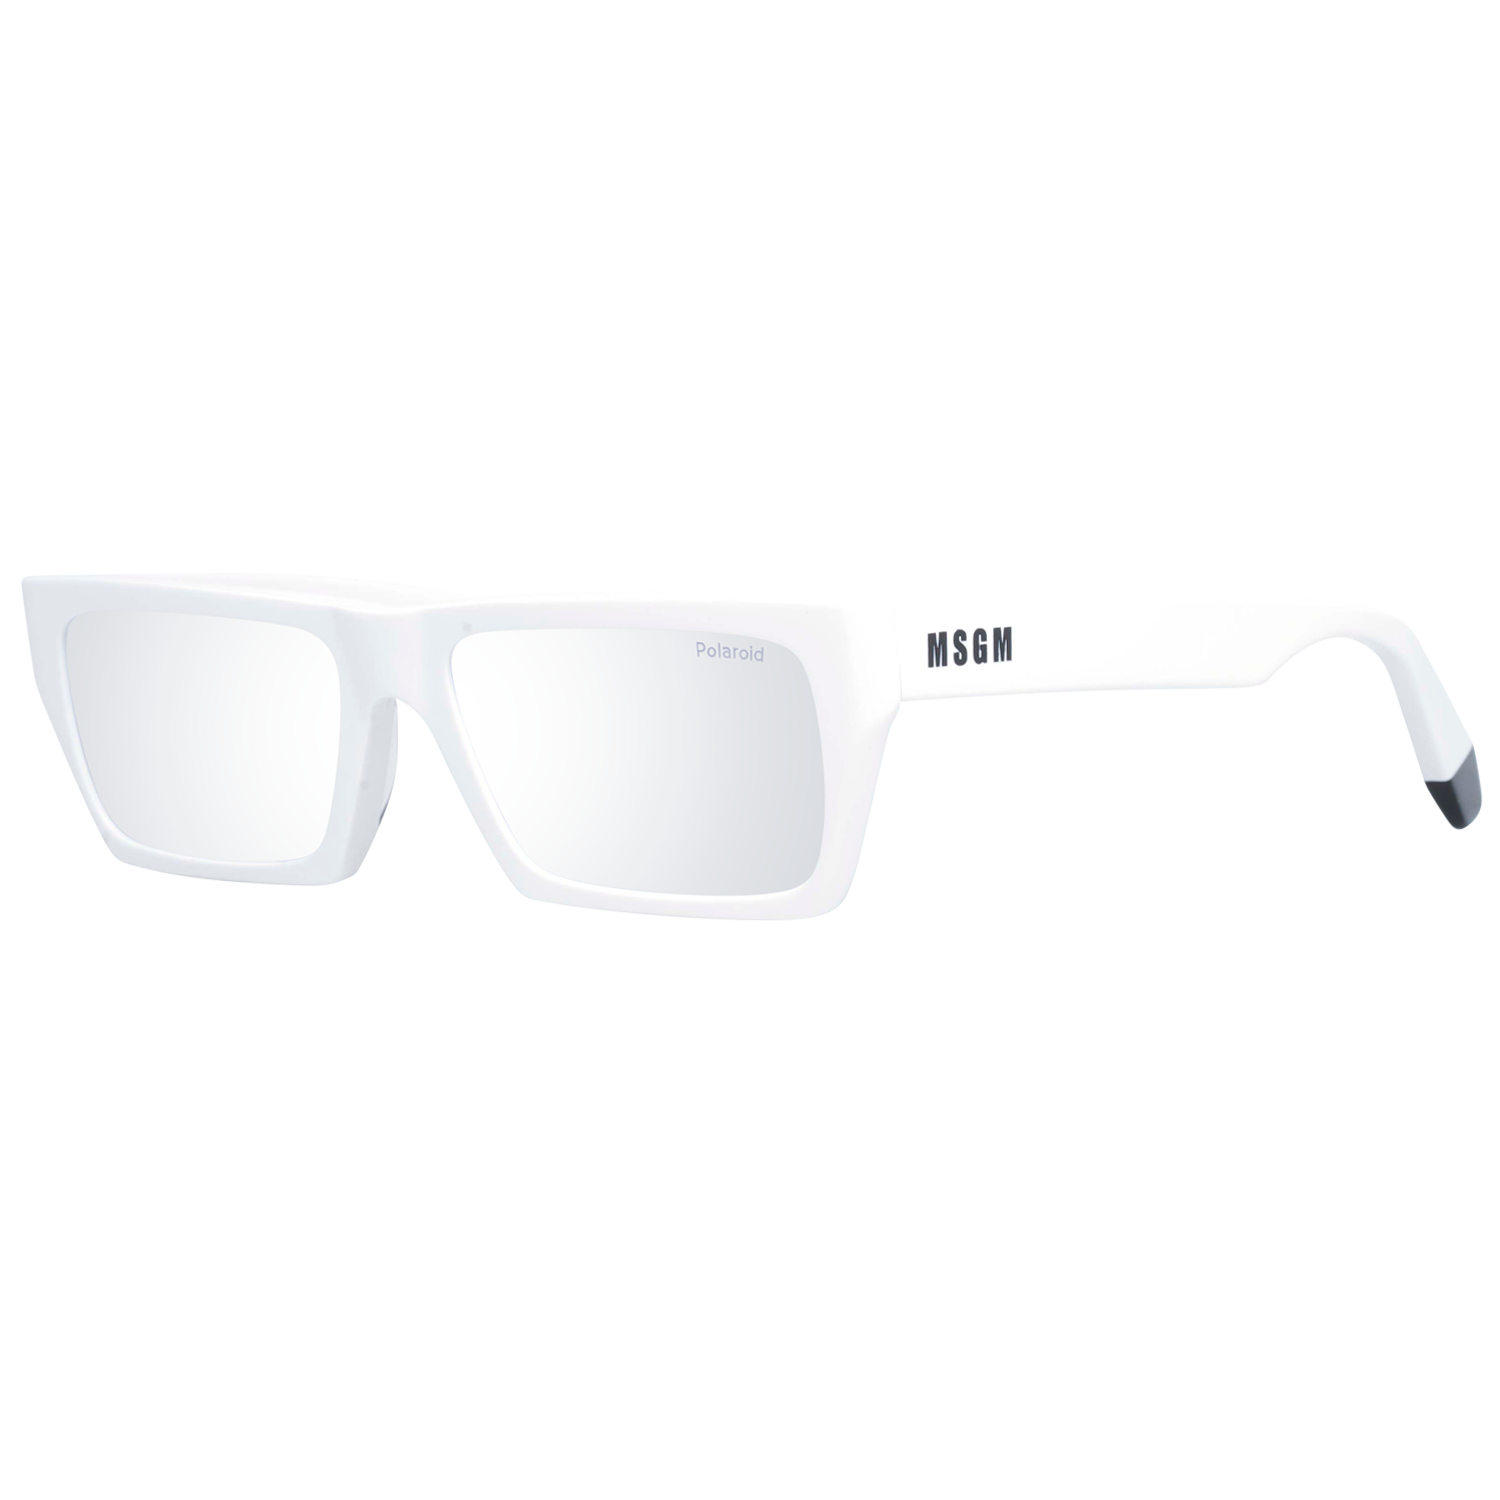 Polaroid Sunglasses Polaroid Sunglasses PLD MSGM 1/G CCPEX 53 Eyeglasses Eyewear UK USA Australia 